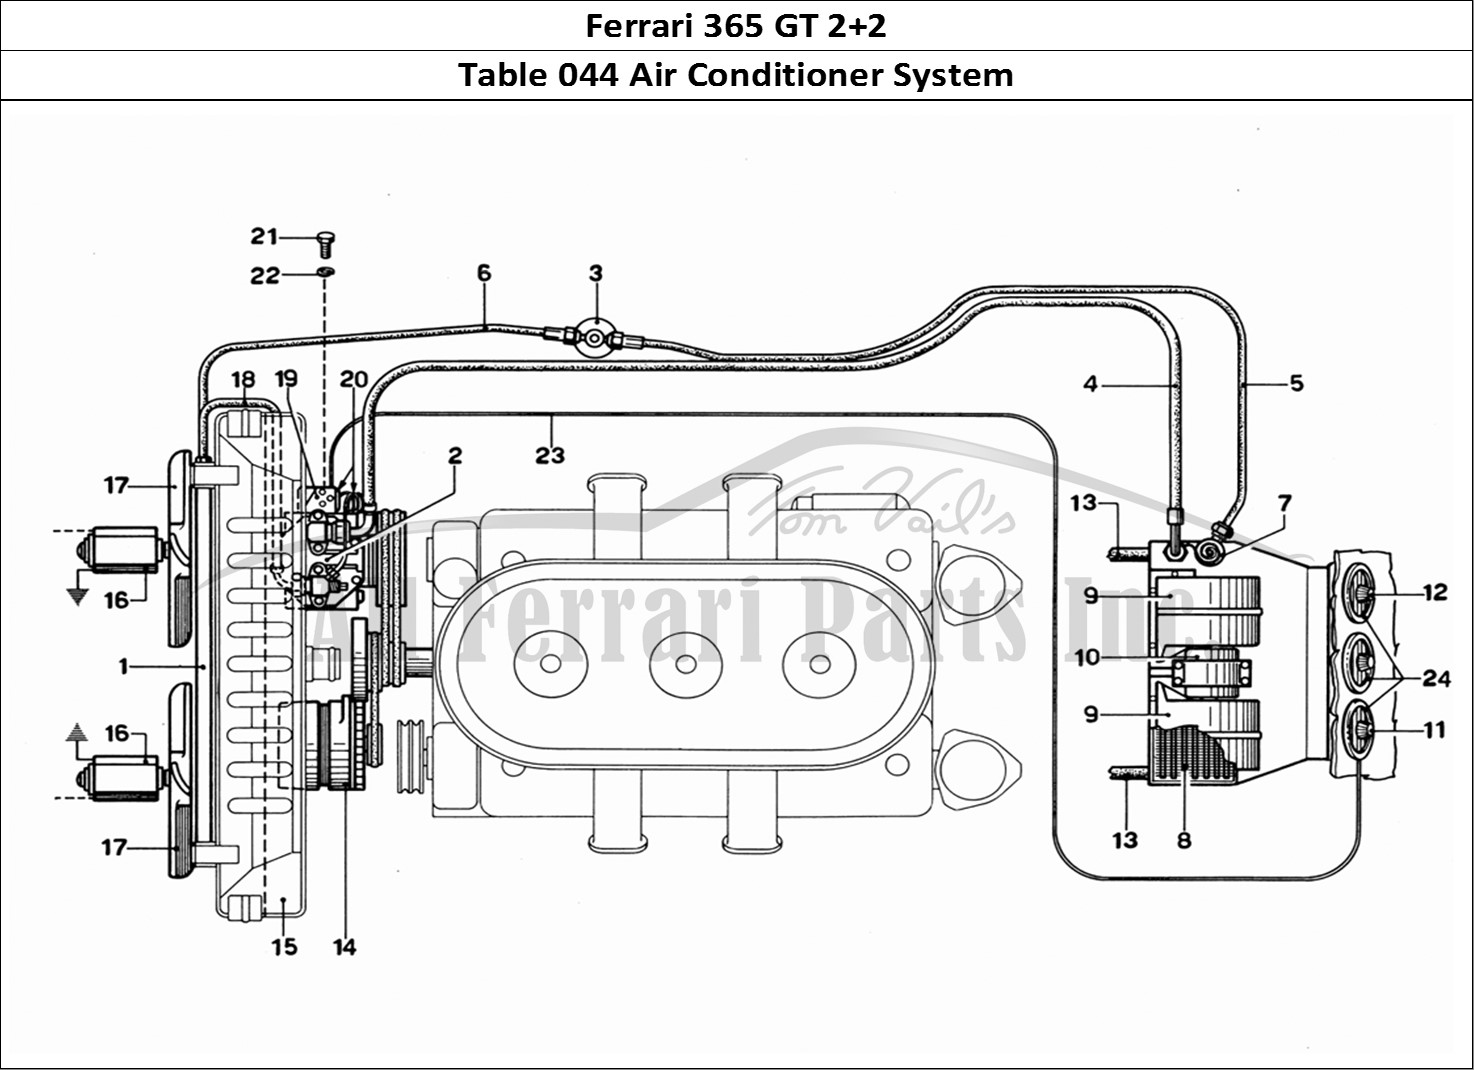 Ferrari Parts Ferrari 365 GT 2+2 (Mechanical) Page 044 Air Conditioning Layout S